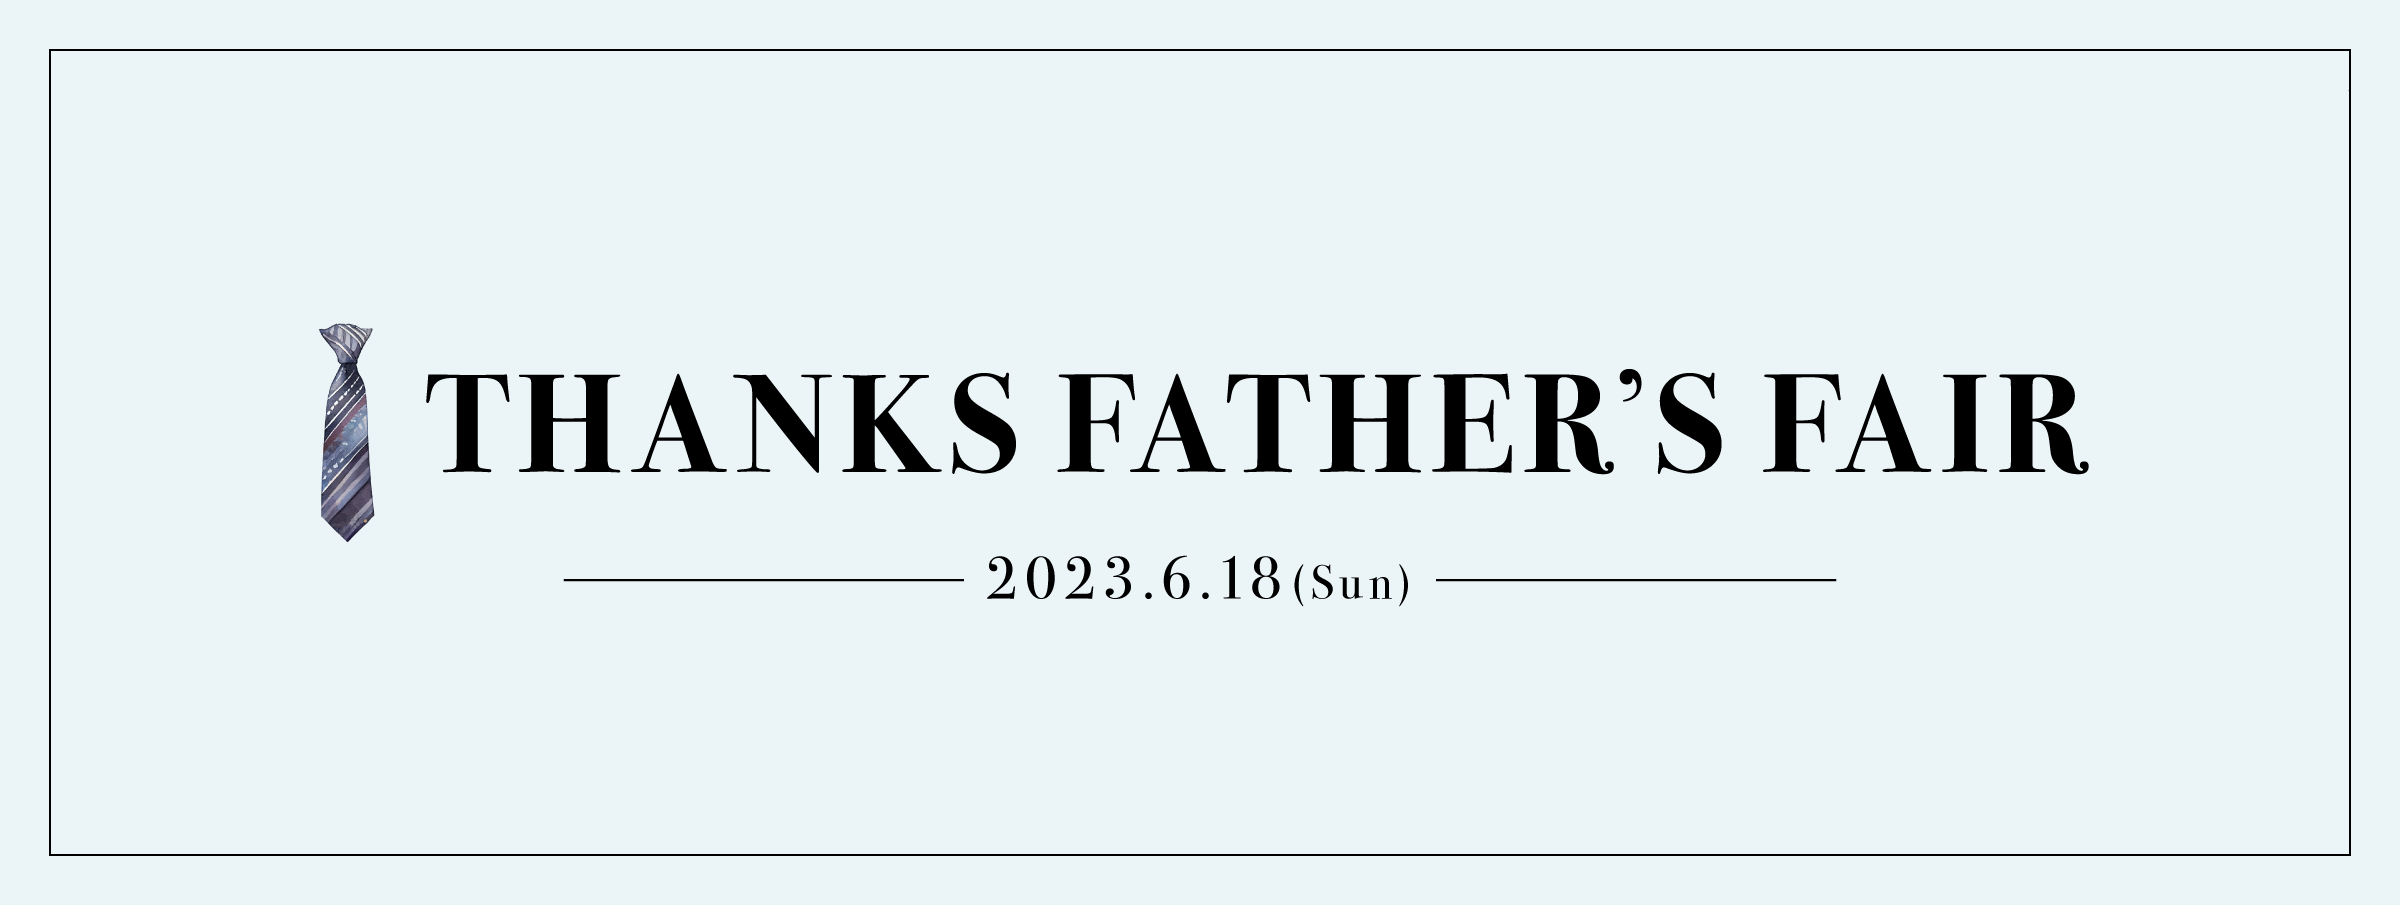 THANKS FATHER'S FAIR 2023